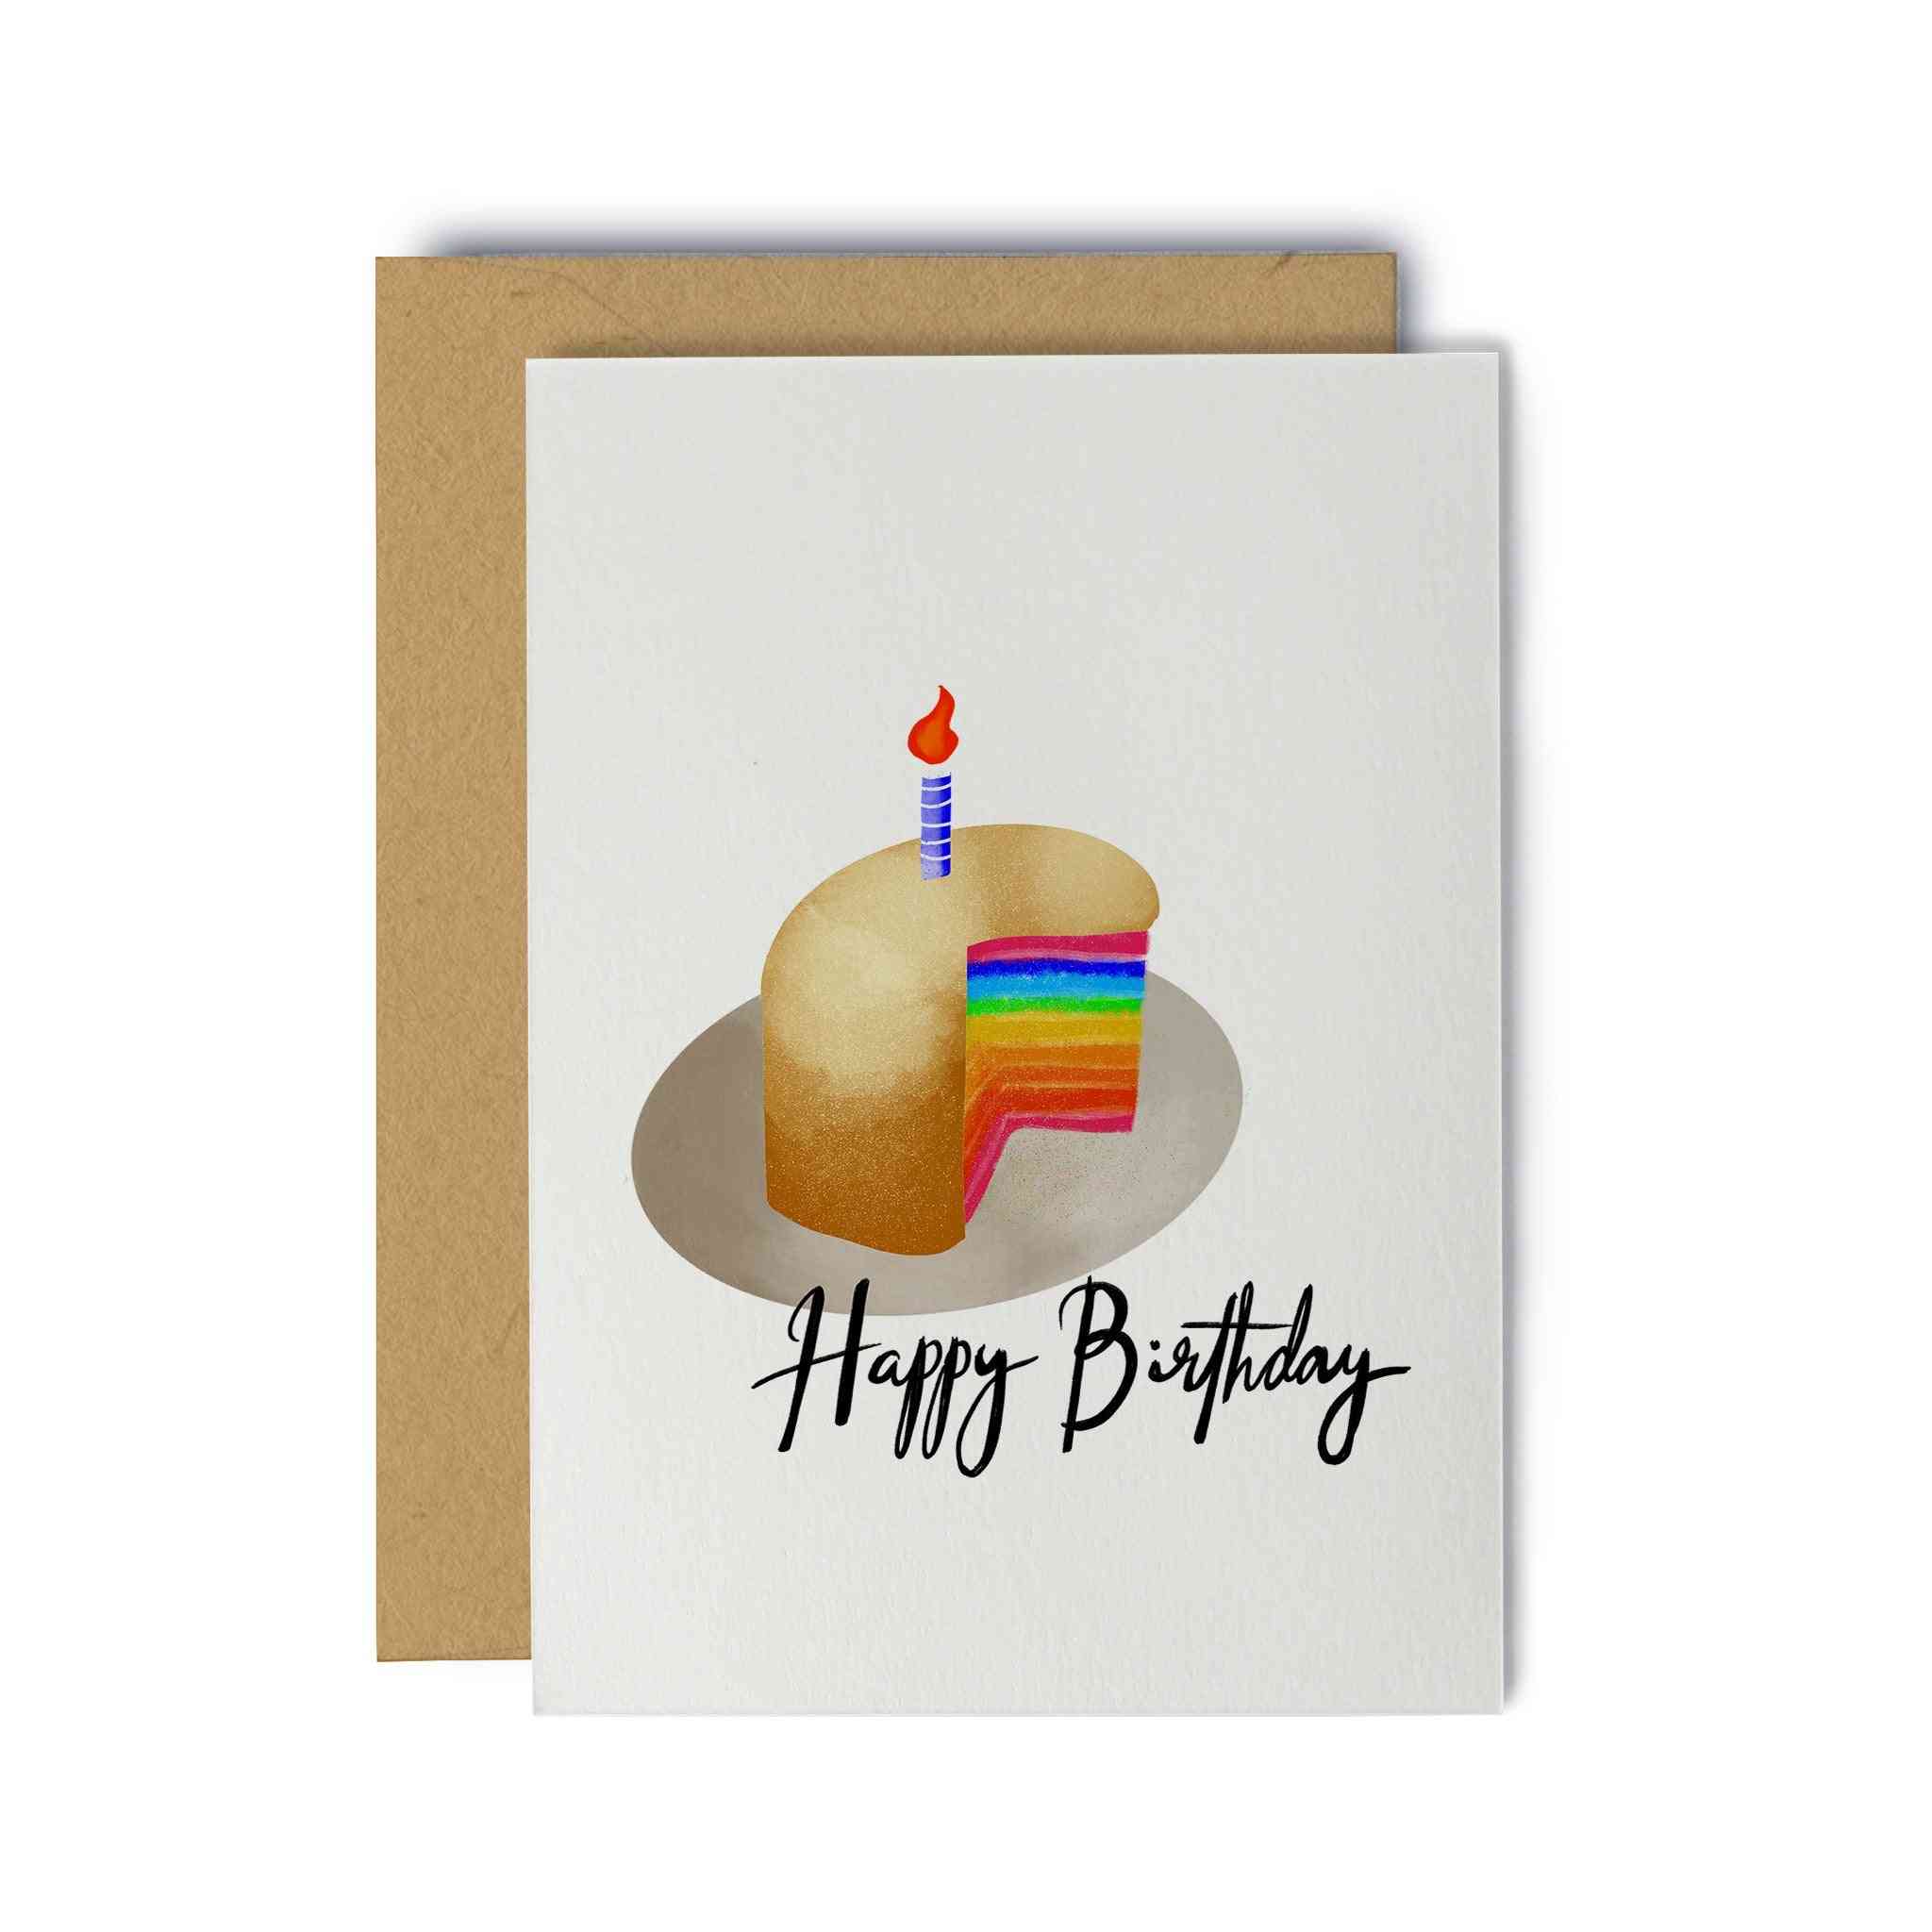 Tillykke med fødselsdagen regnbue kage lykønskningskort